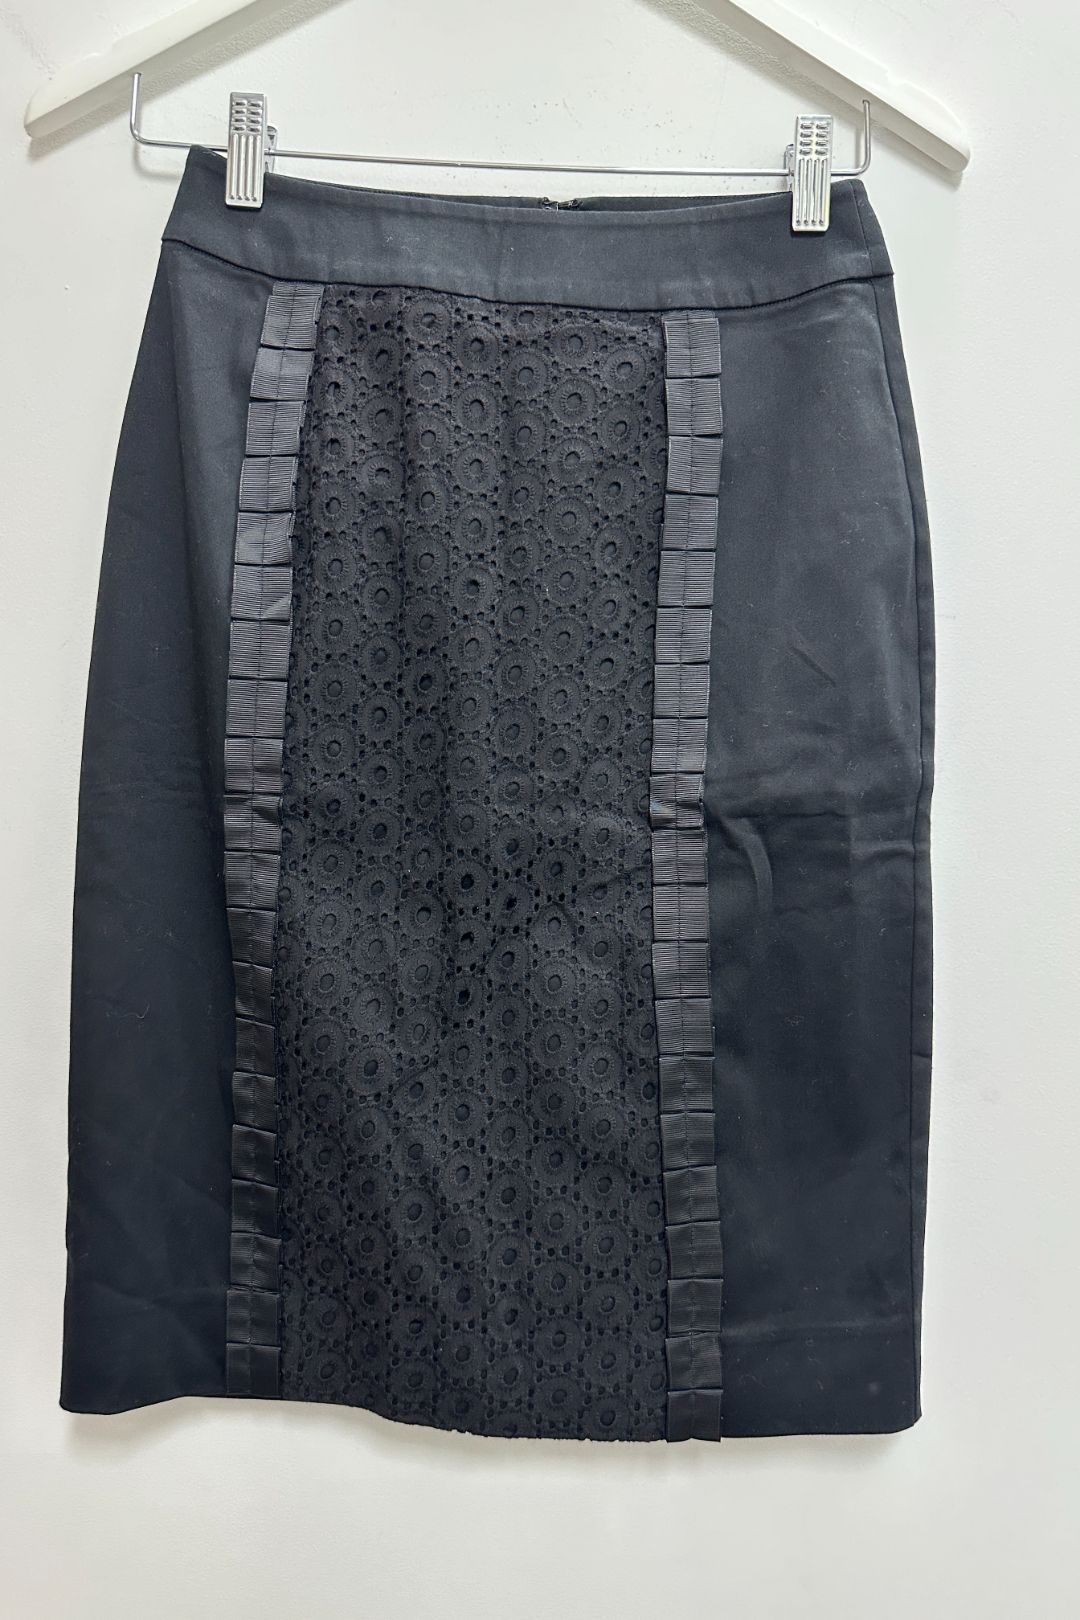 Alannah Hill Lace Detail Black Pencil Skirt